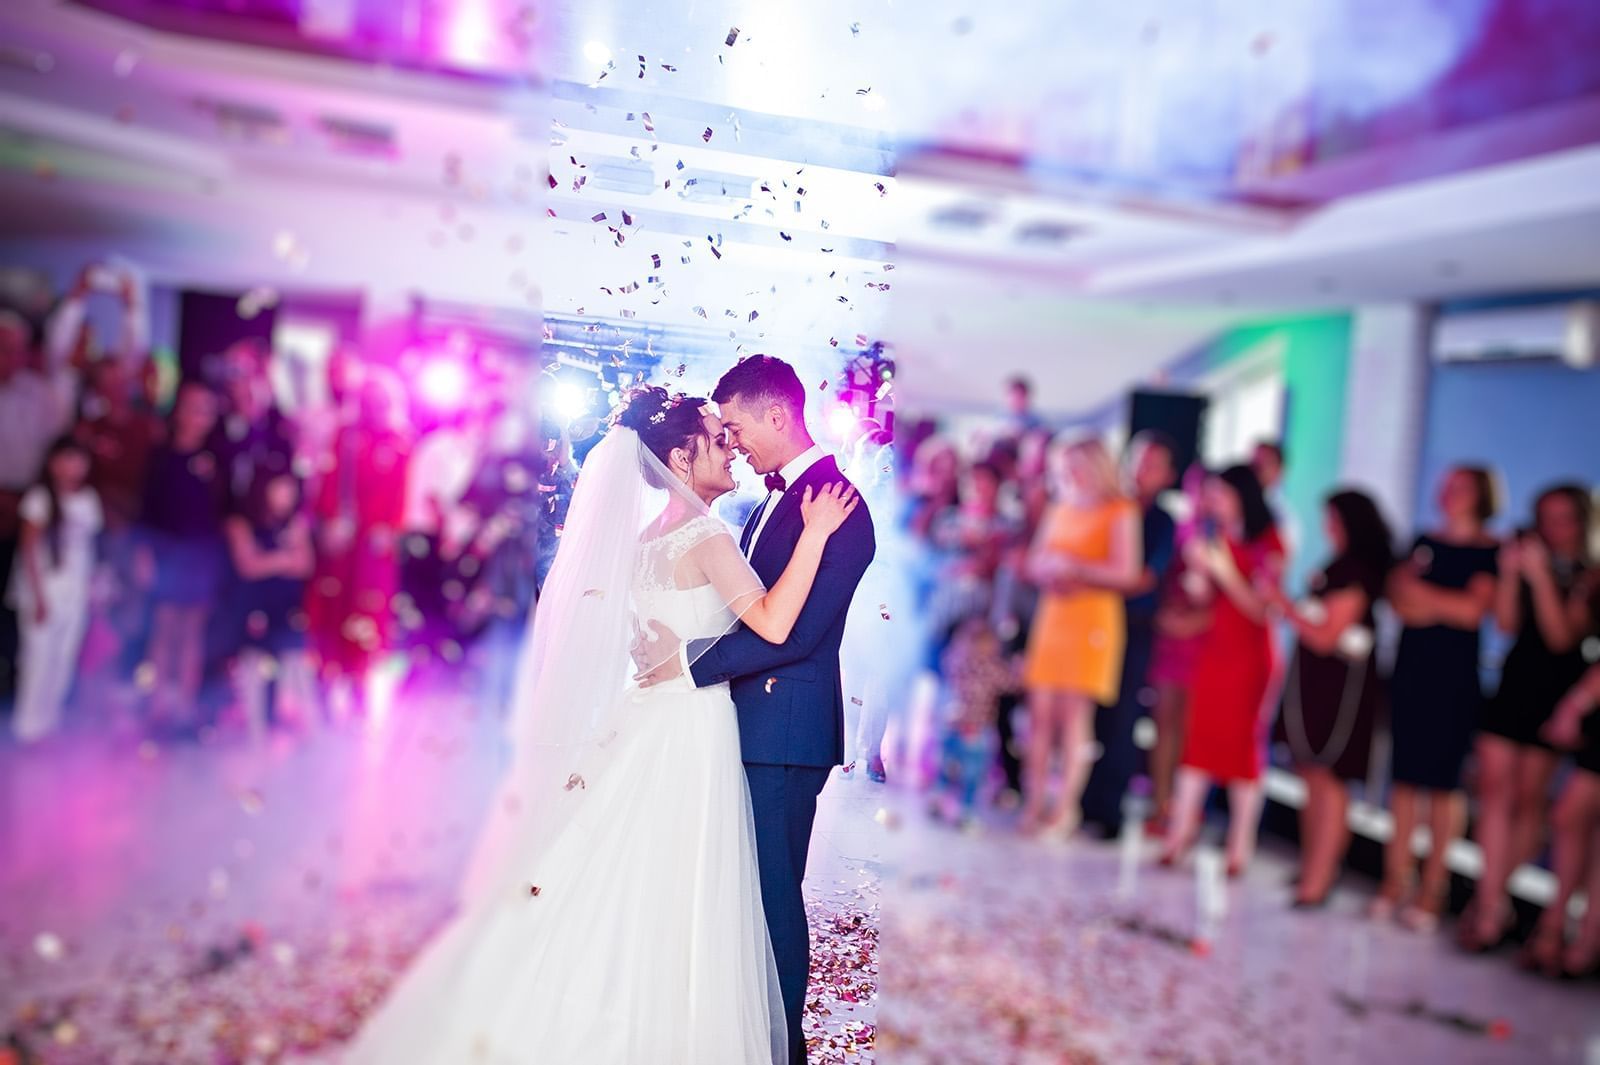 Newly married couple on dance floor